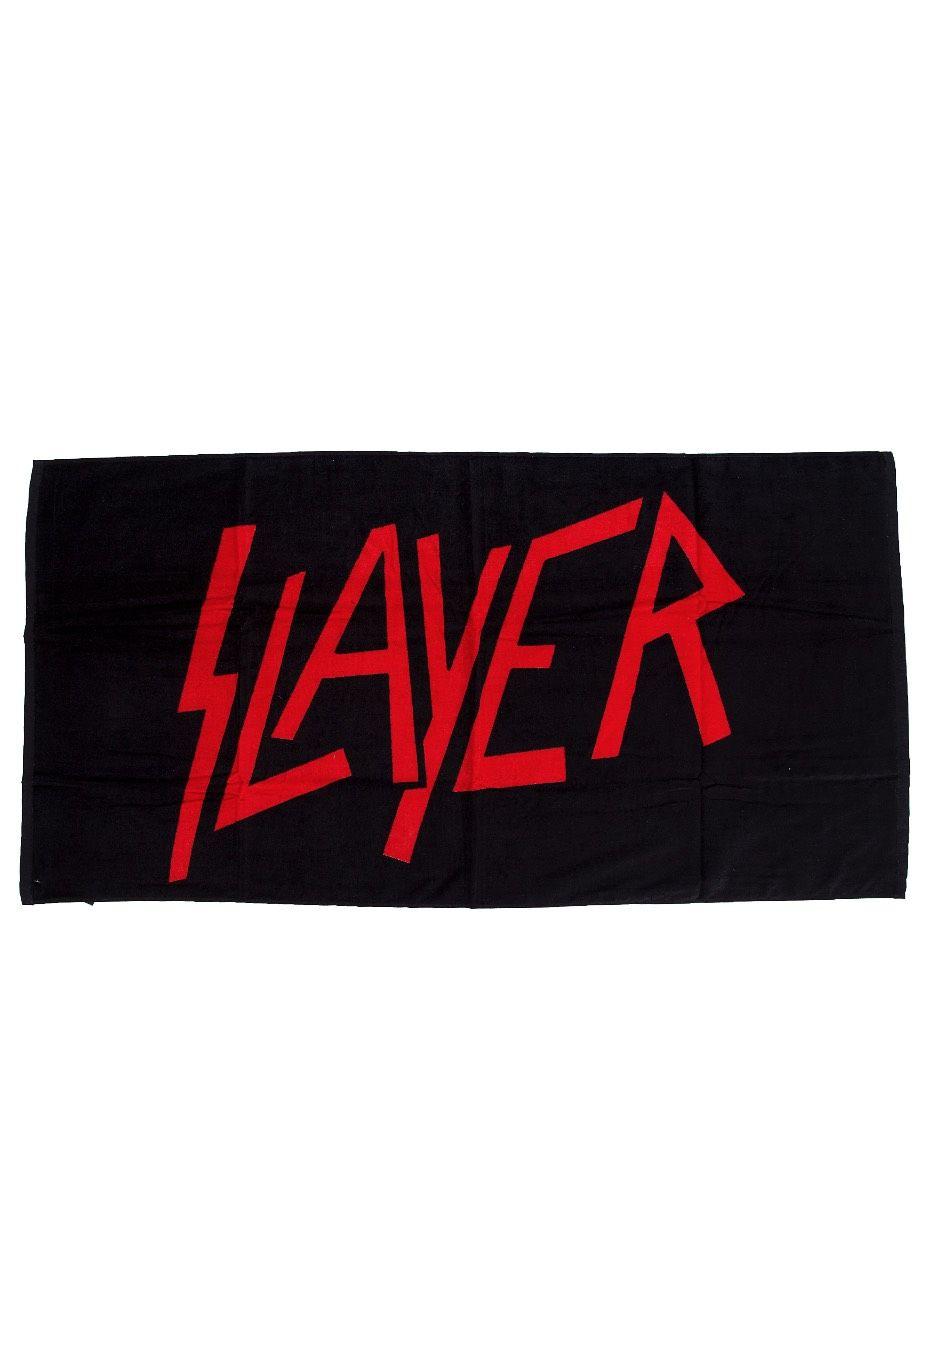 Slayer Logo - Slayer - Logo - Towel - Official Metal Merchandise Shop - Impericon ...